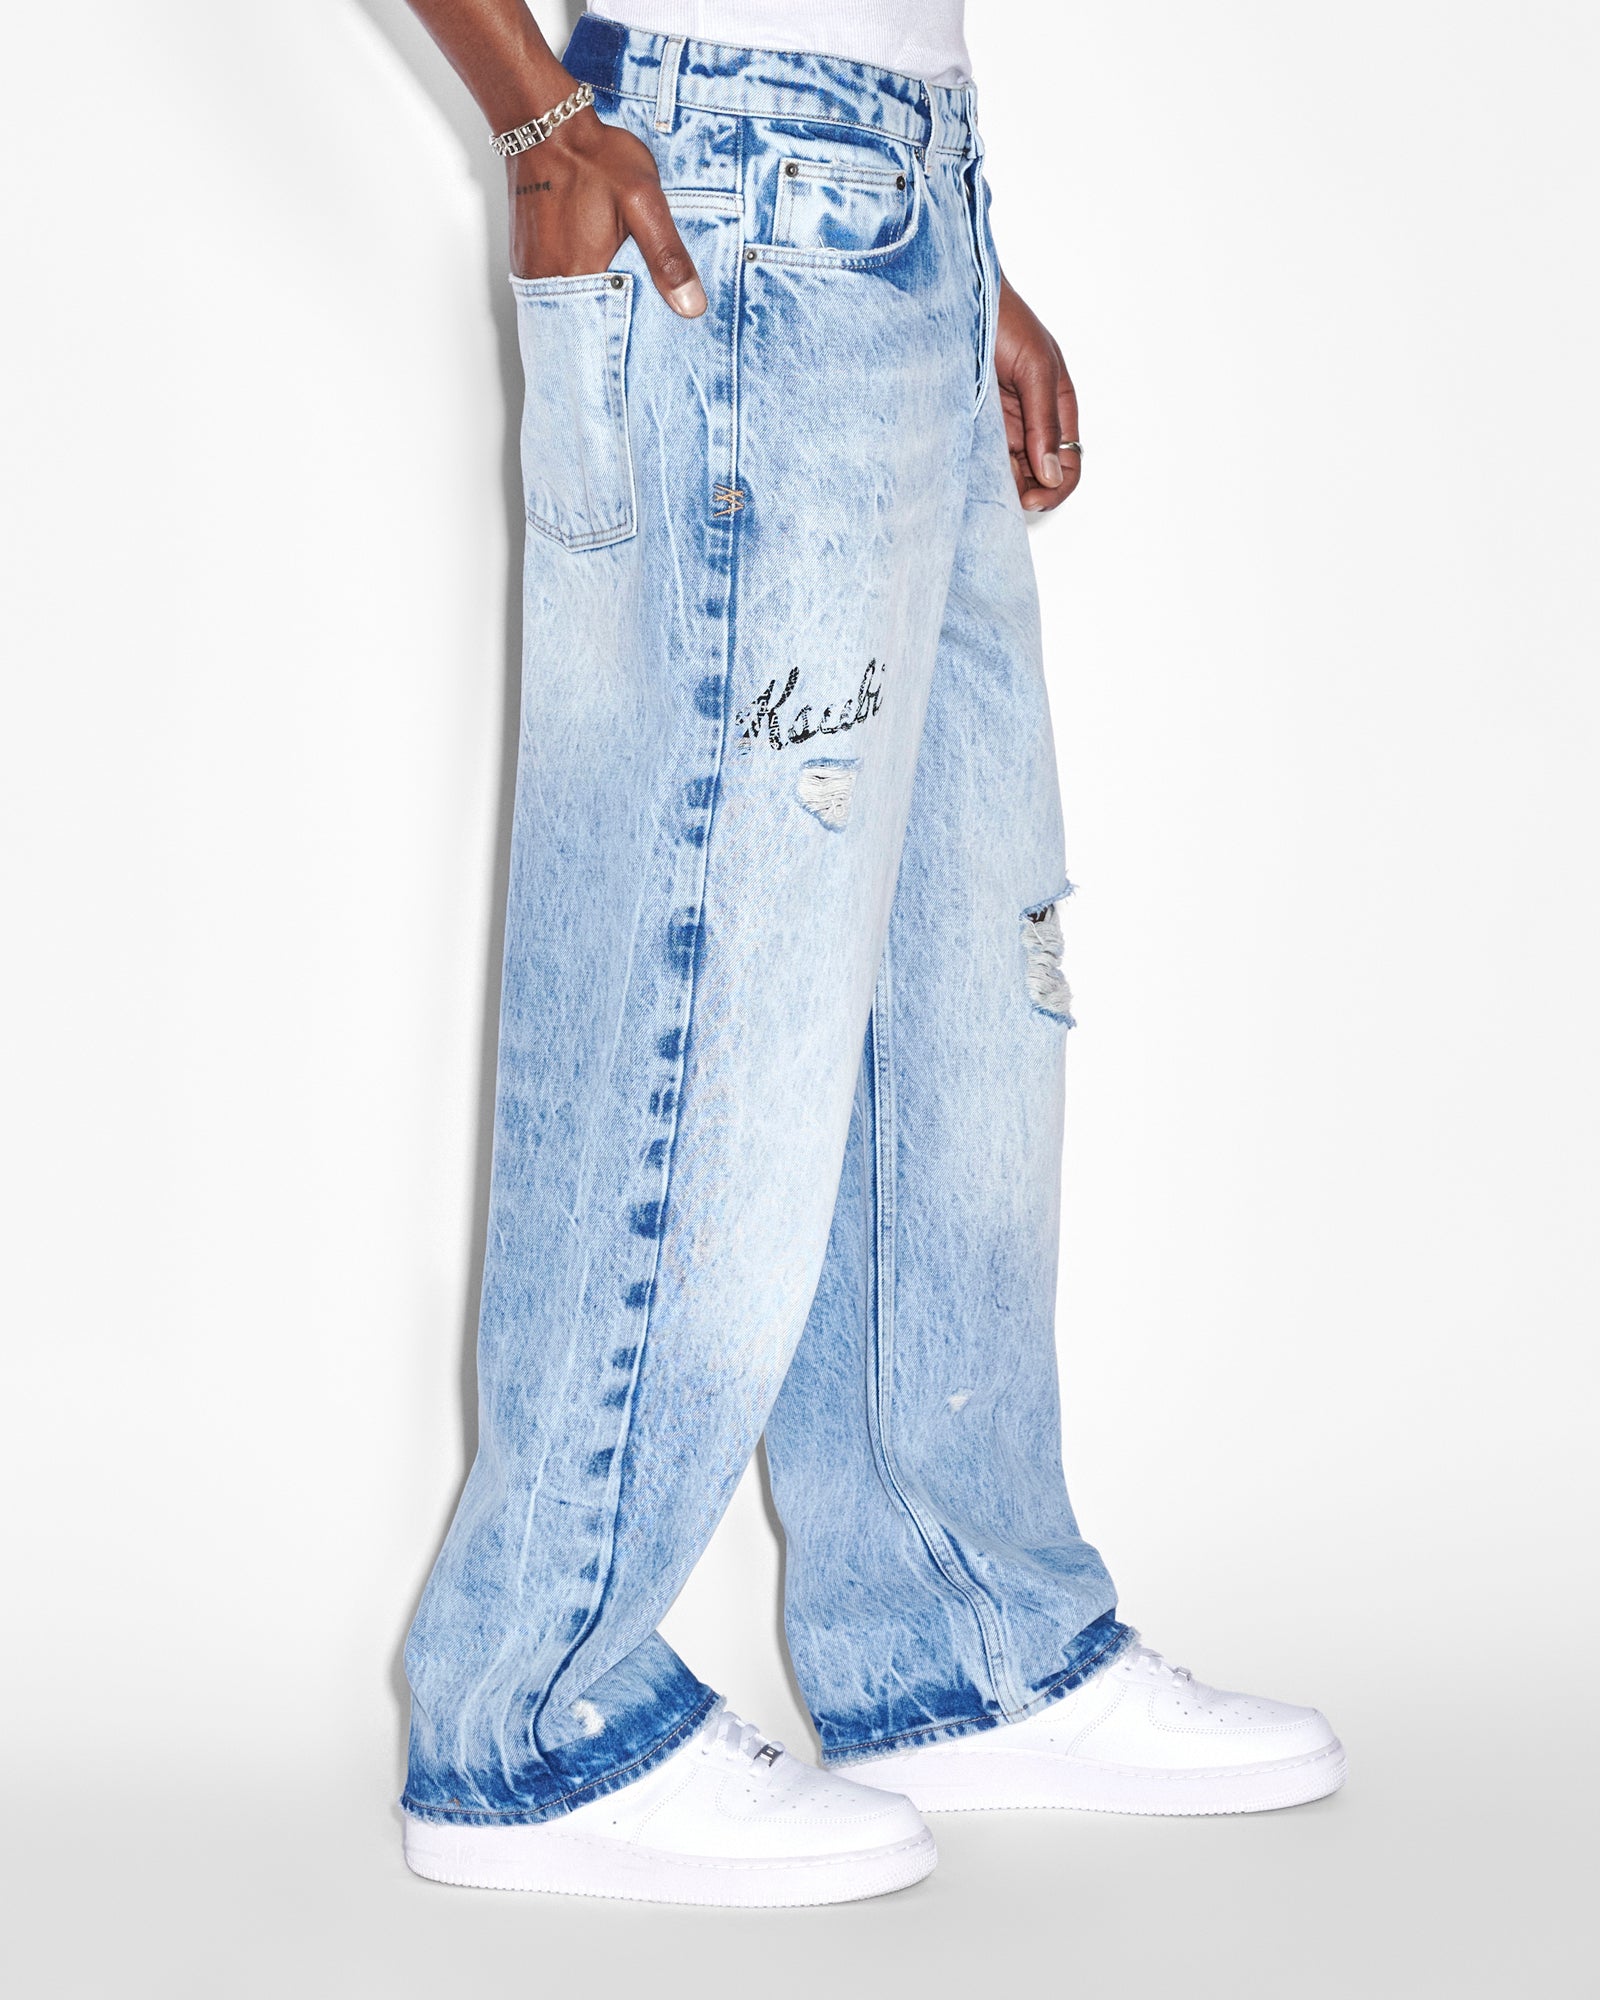 Shop Women's Denim, Ripped Jeans For Women & More, Ksubi